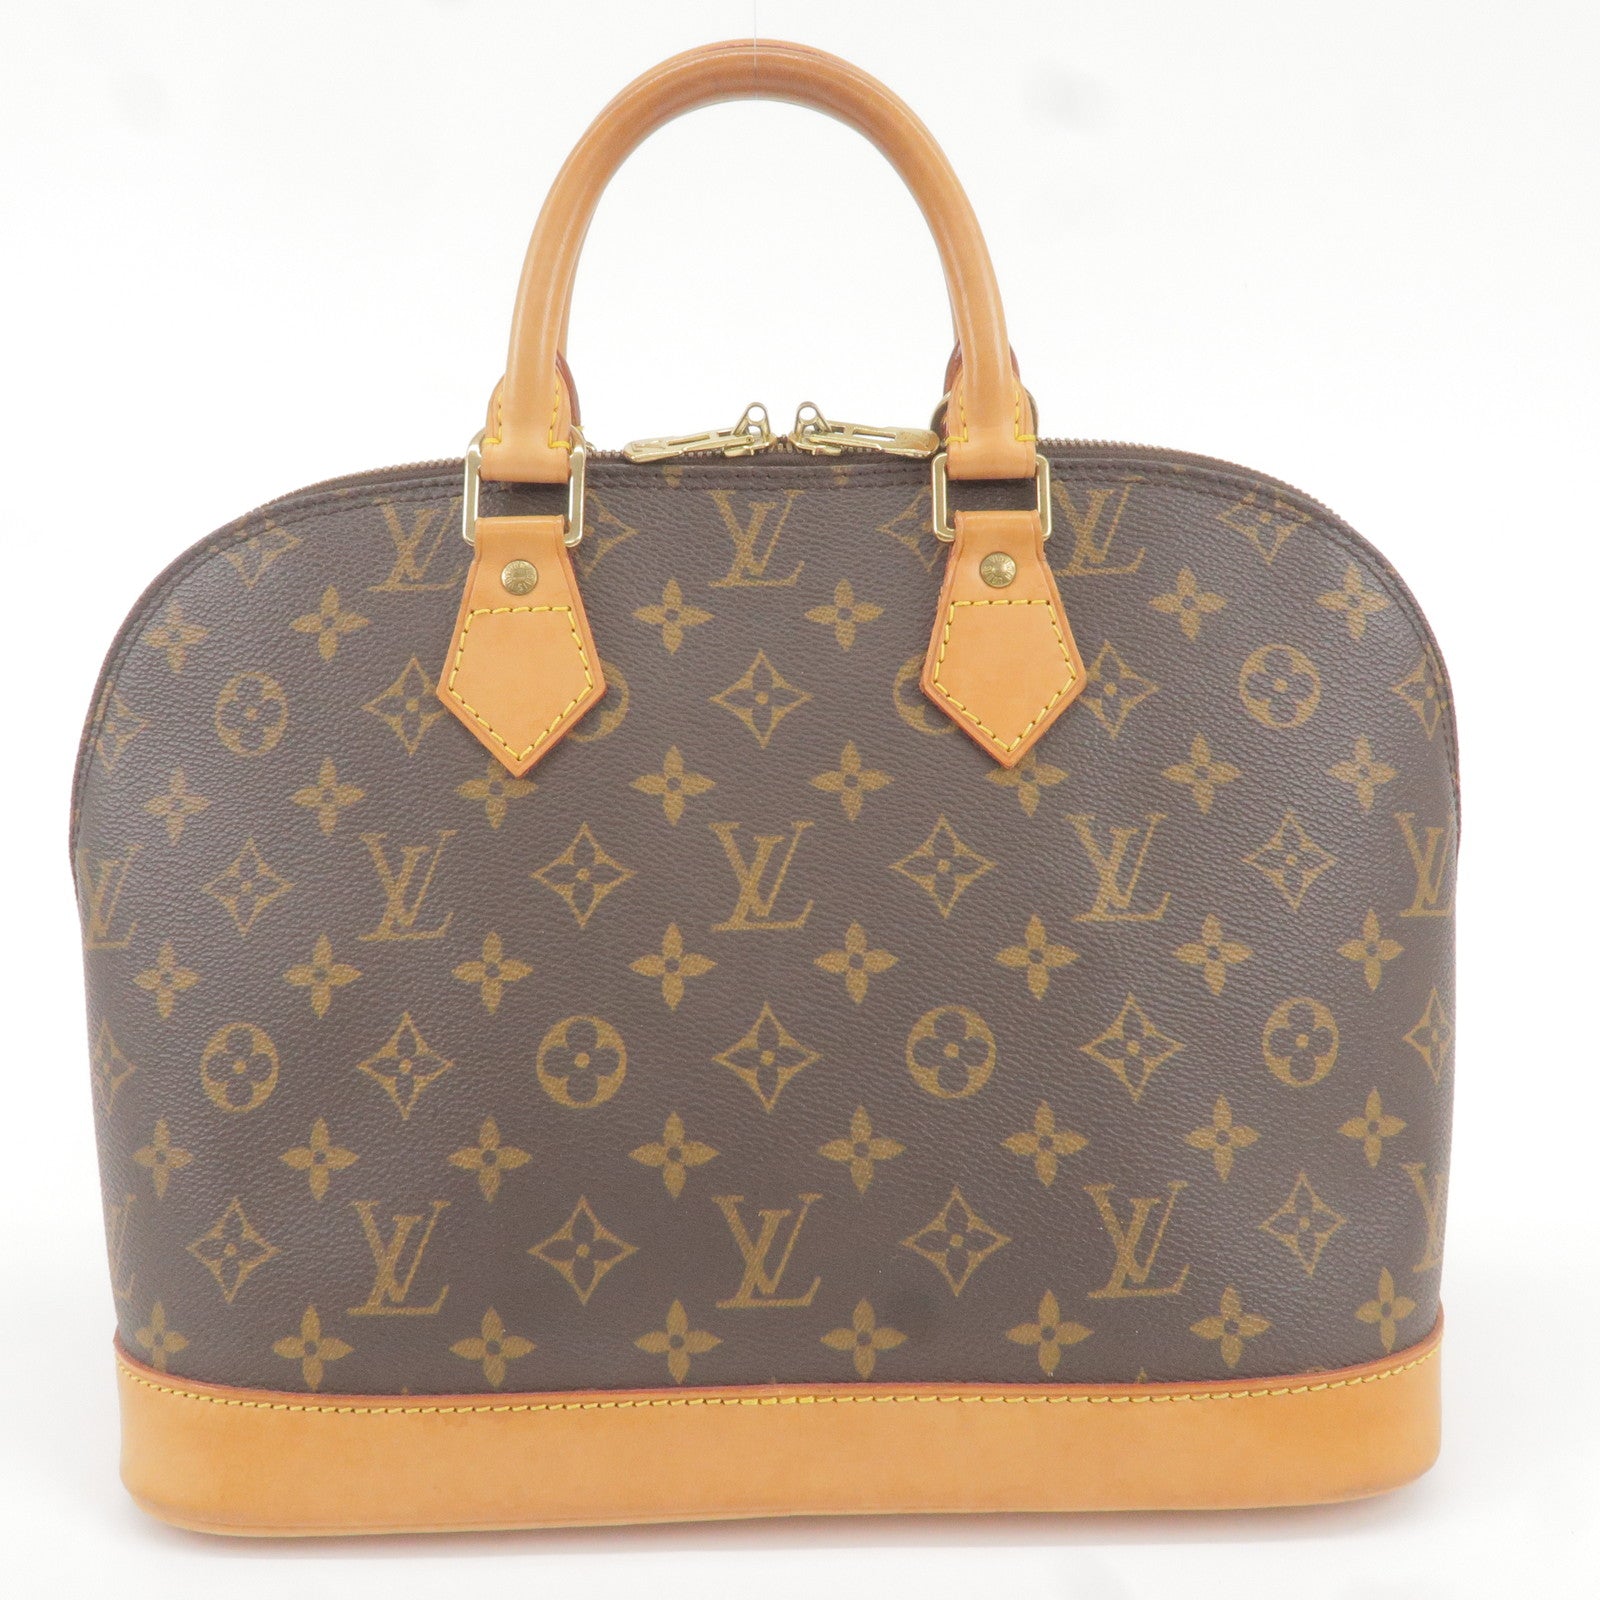 Louis Vuitton Alma travel bag